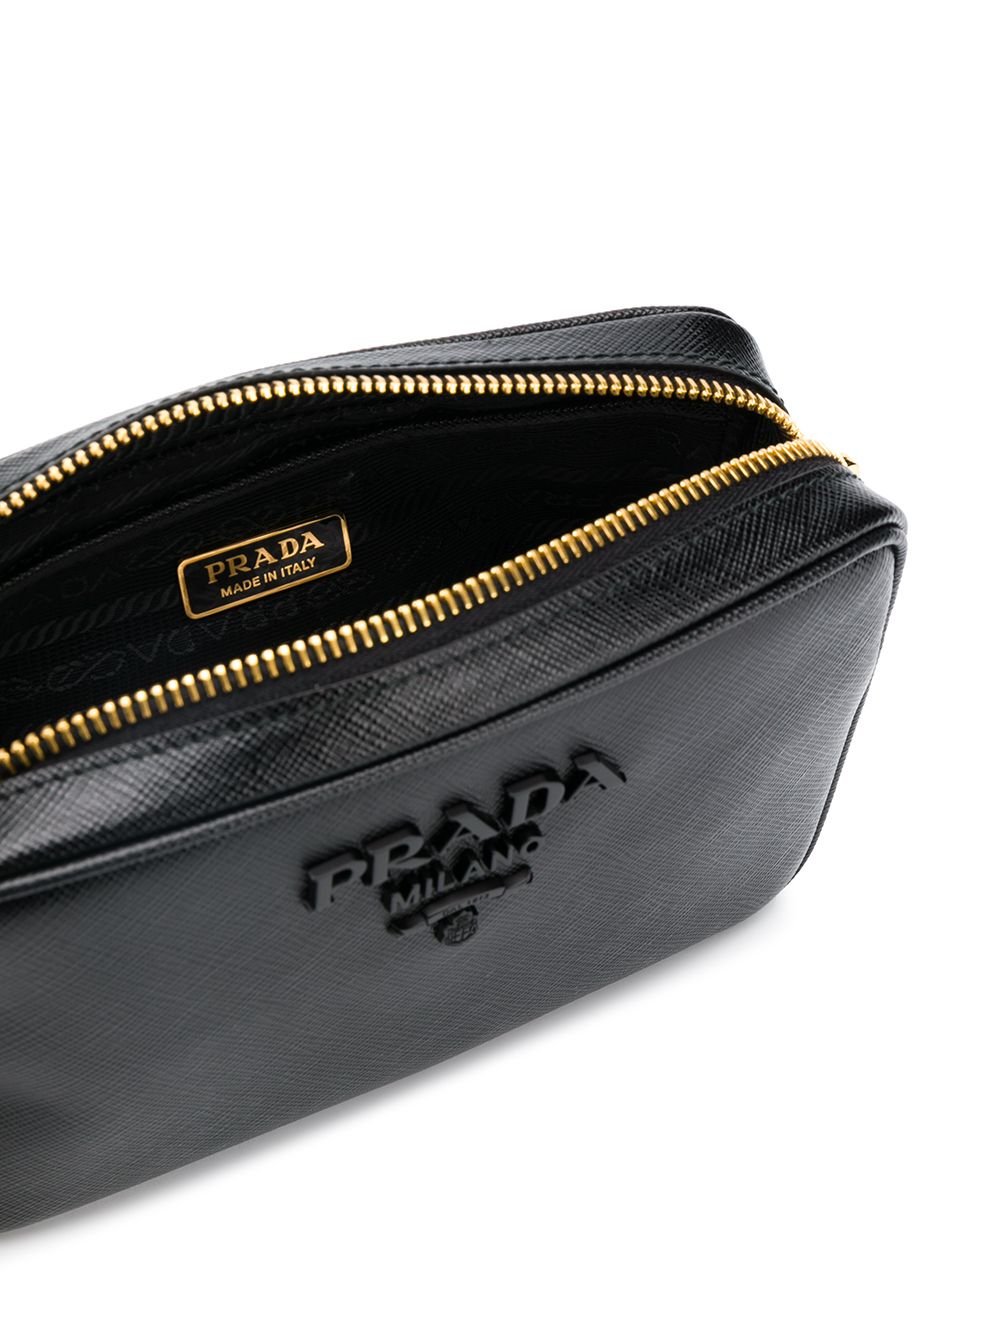 фото Prada каркасная сумка с металлическим логотипом